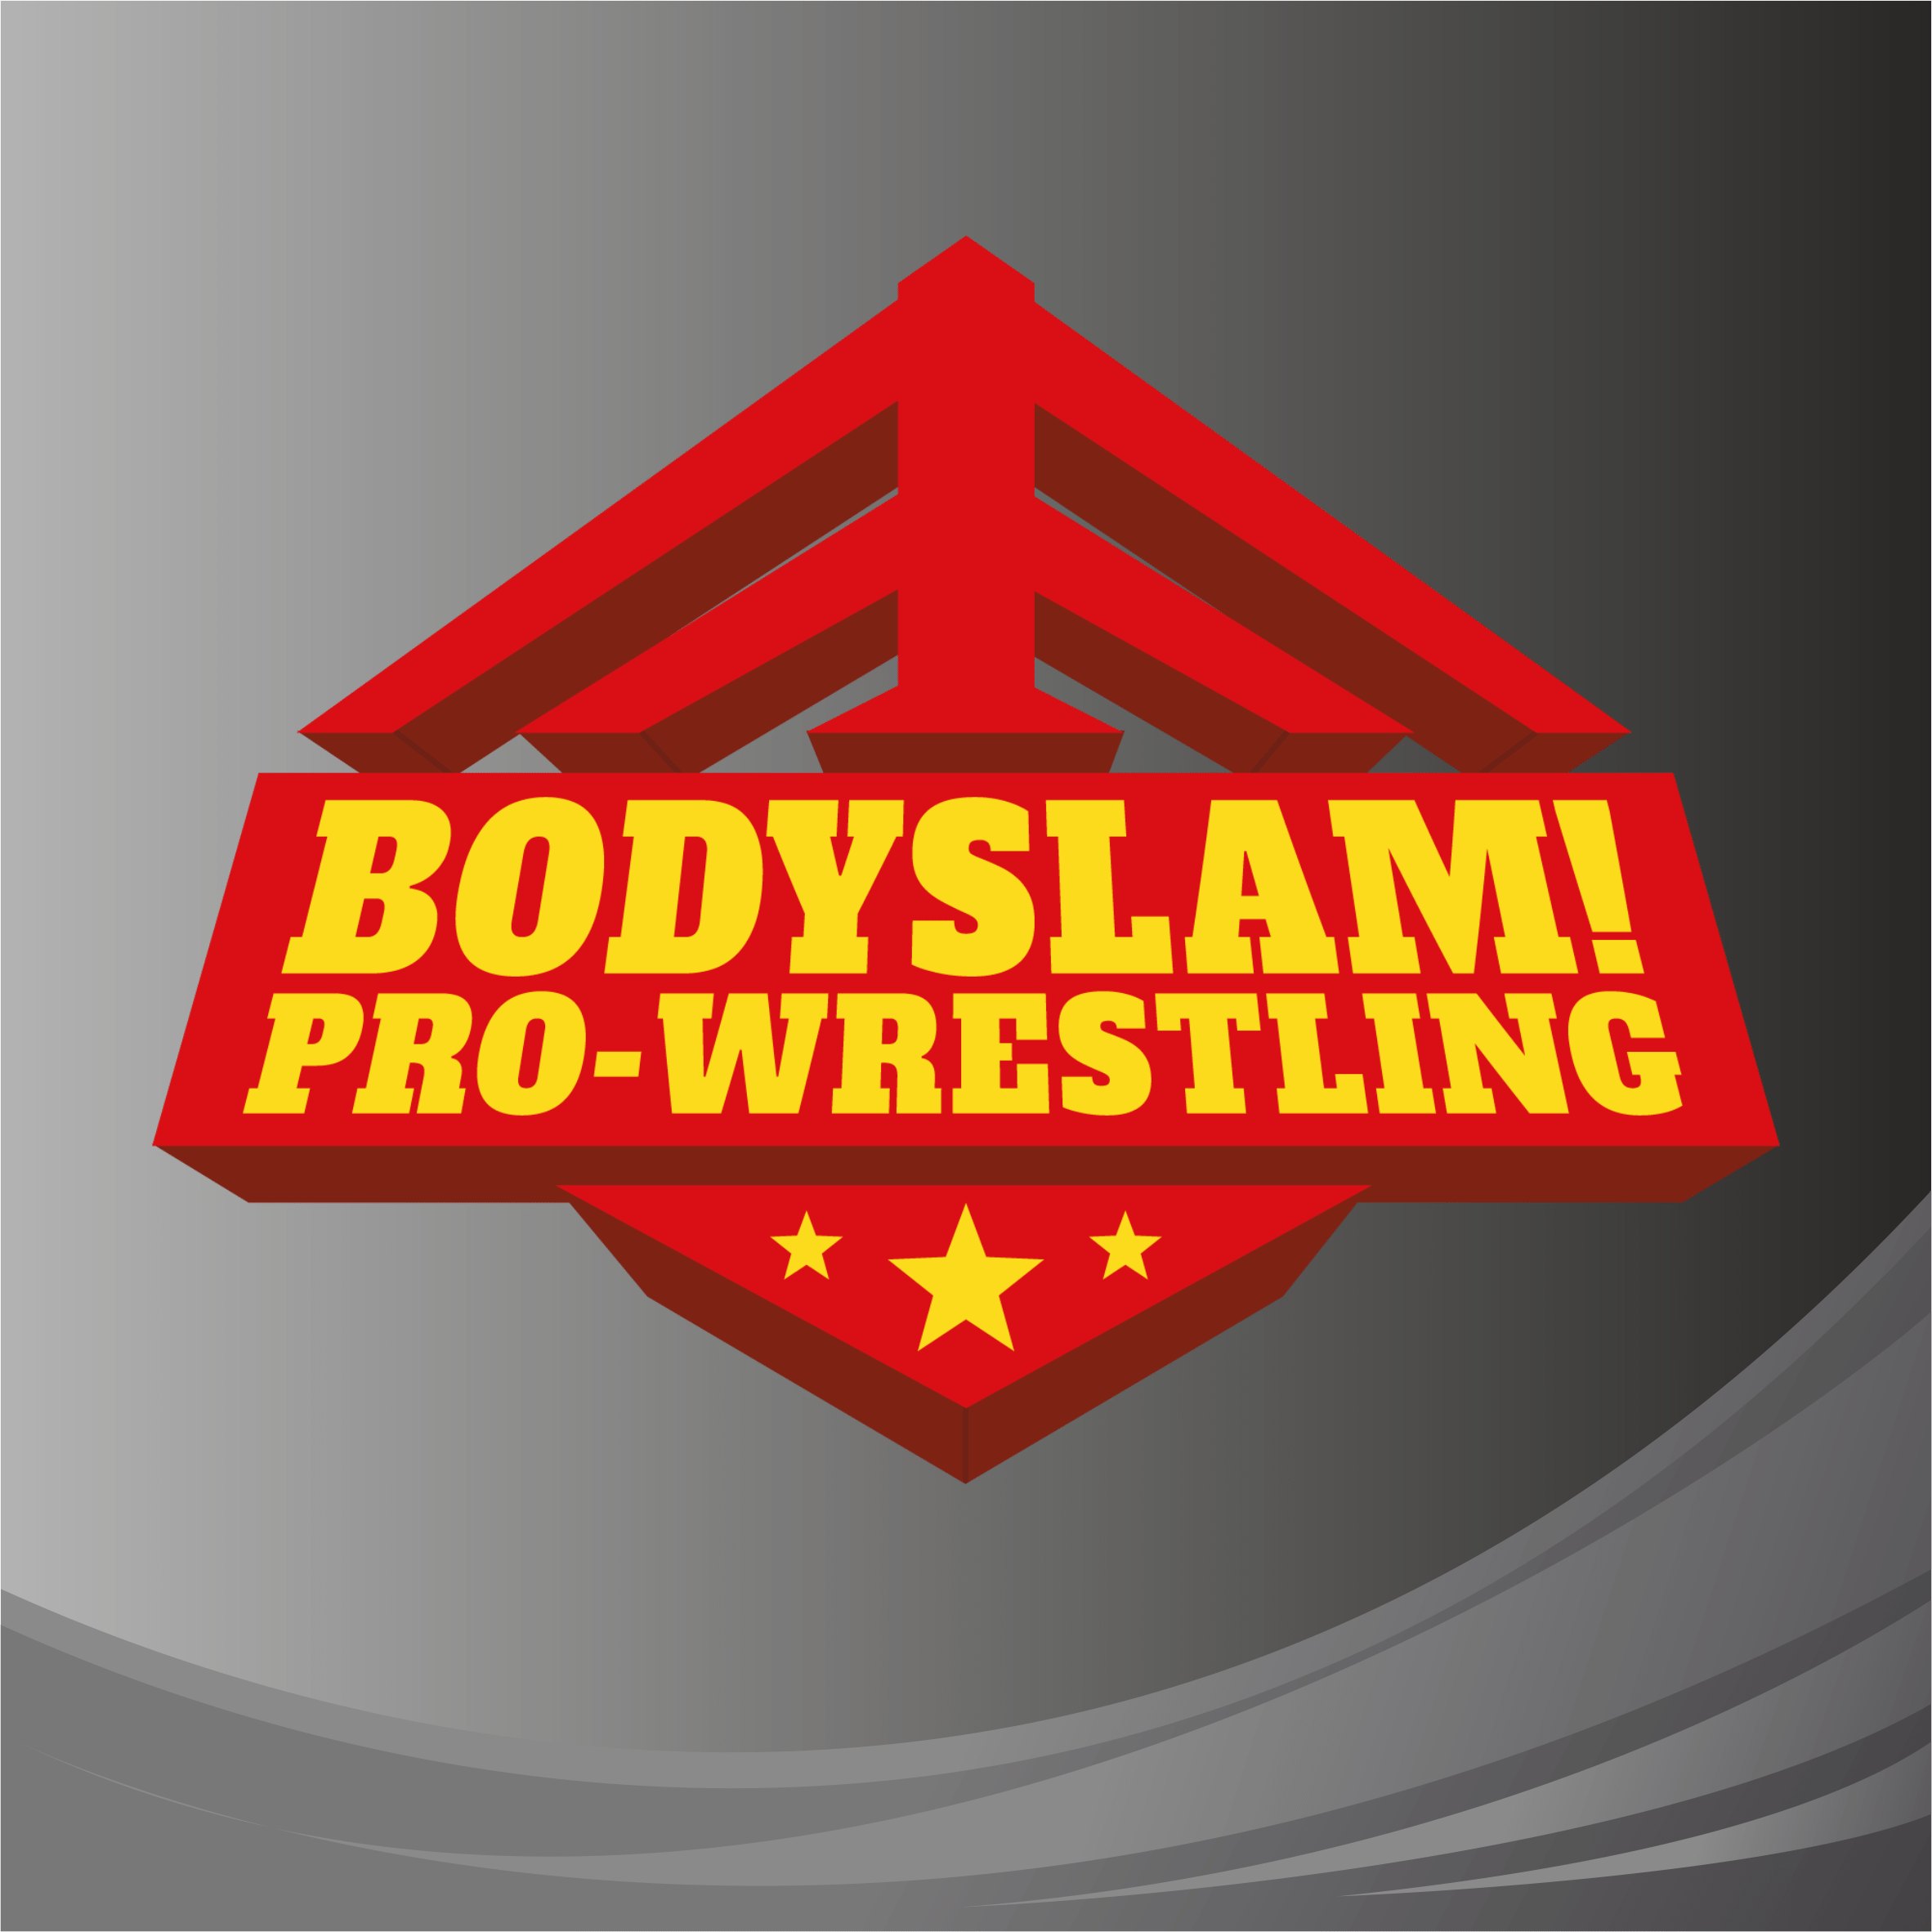 Bodyslam! Pro-Wrestling